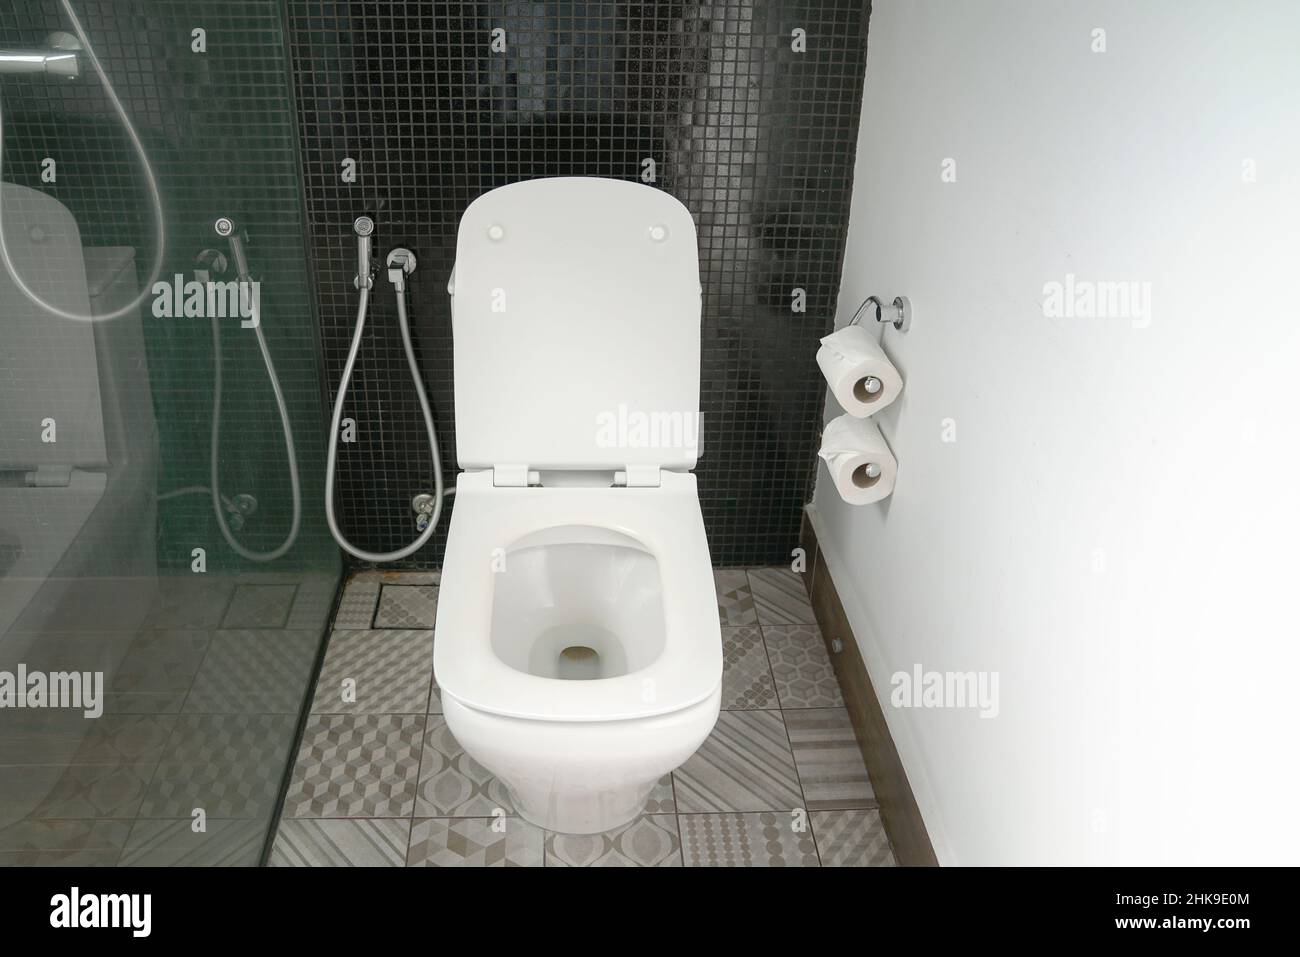 Toilet bowl in hotel bathroom, modern interior. Stock Photo